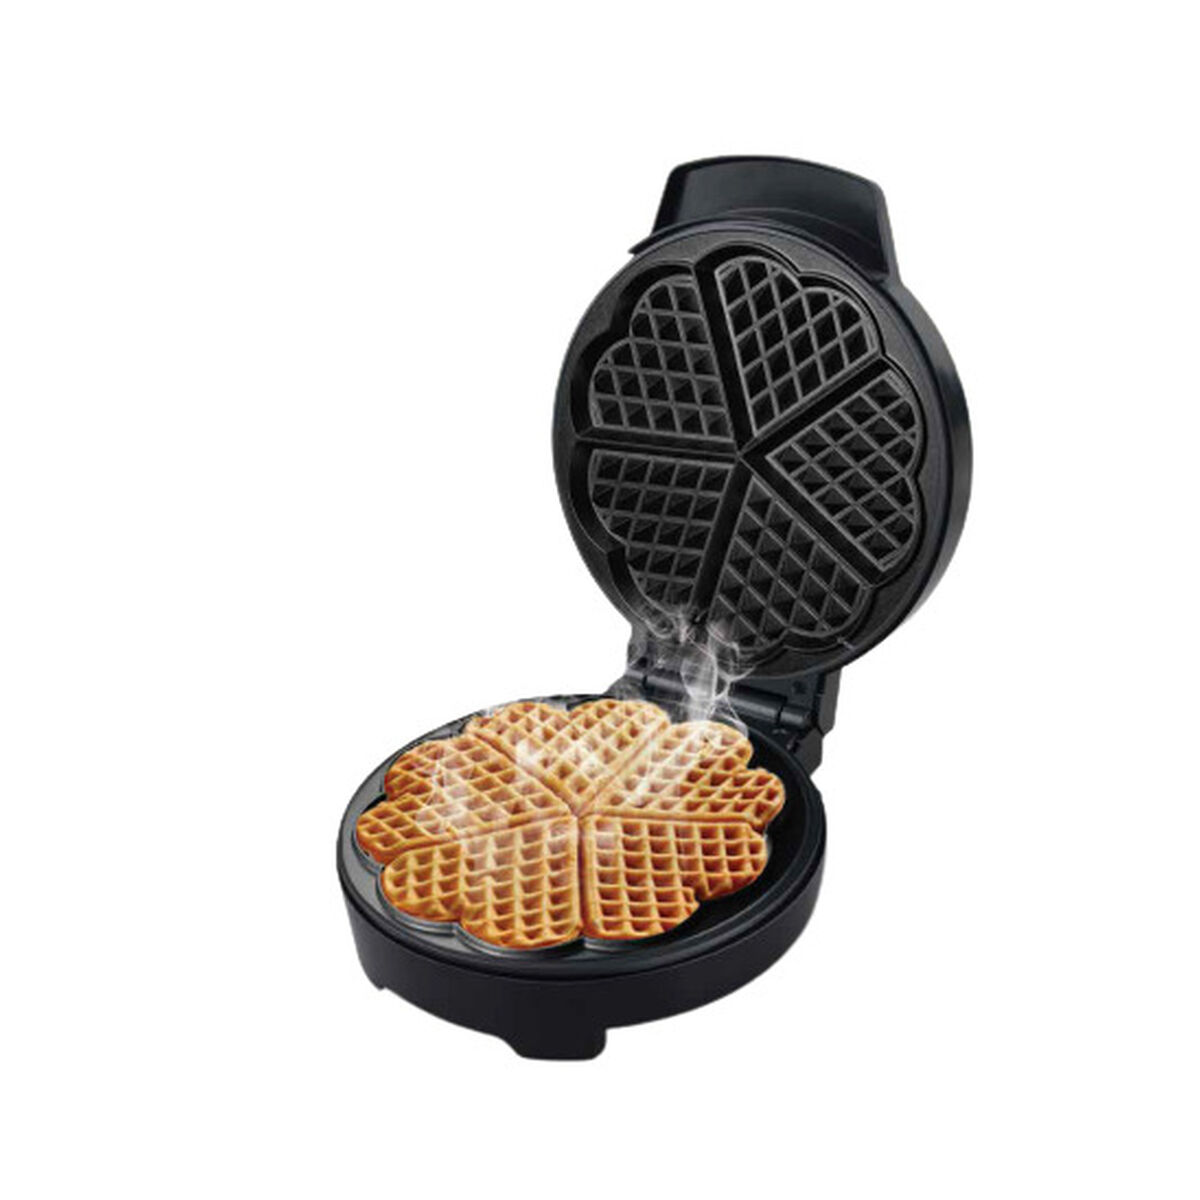 Macchine per waffle